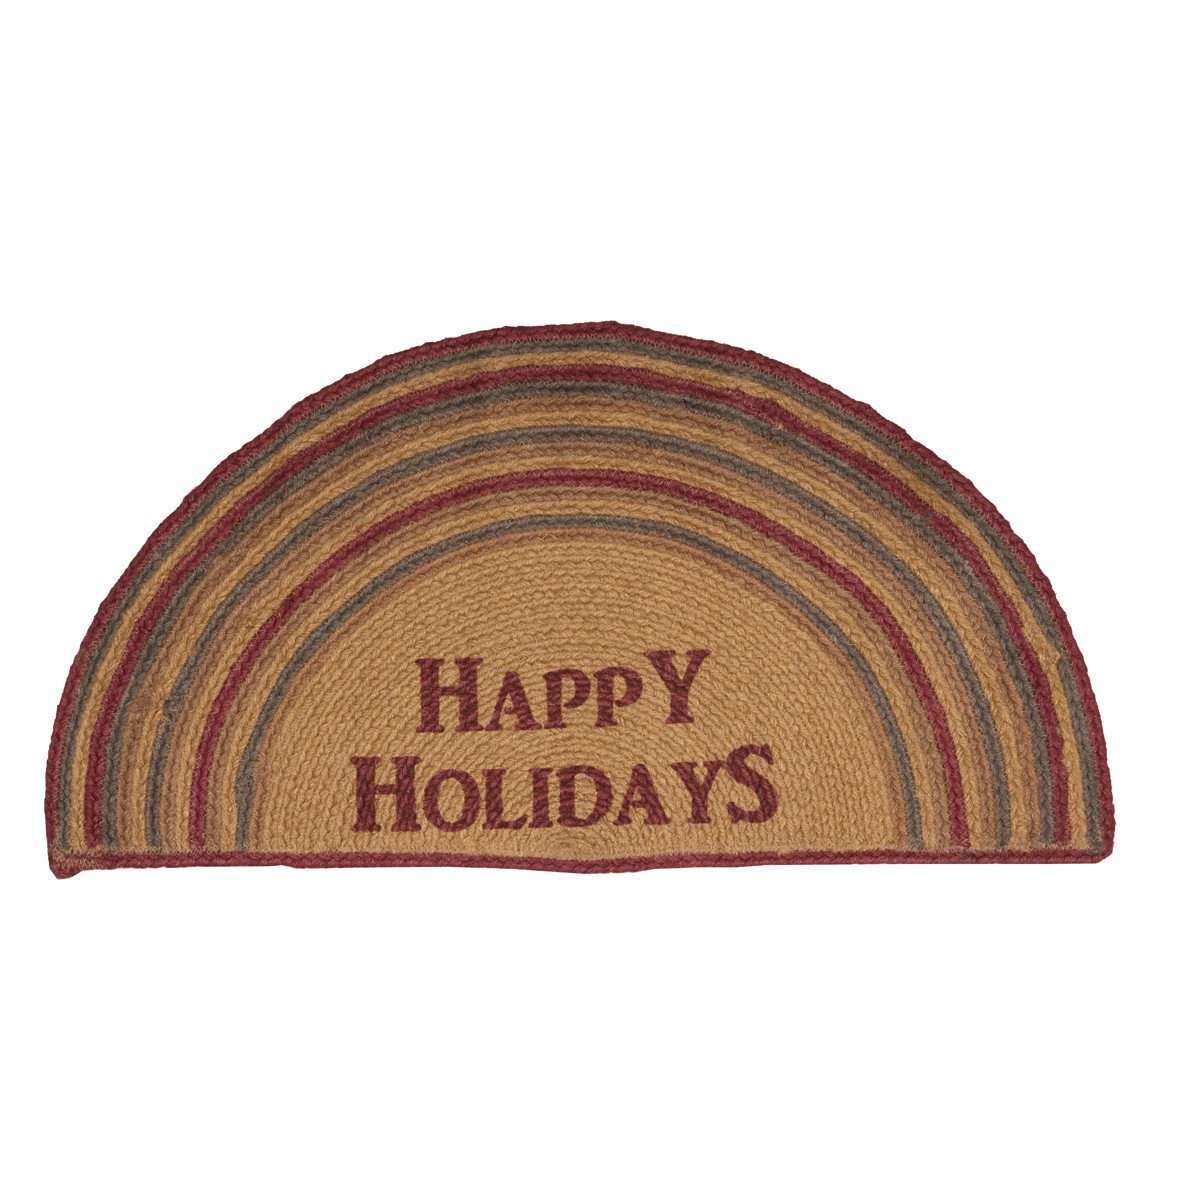 Happy Holidays Stencil Jute Braided Rug Half Circle VHC Brands rugs VHC Brands 16.5X33 Half Circle 